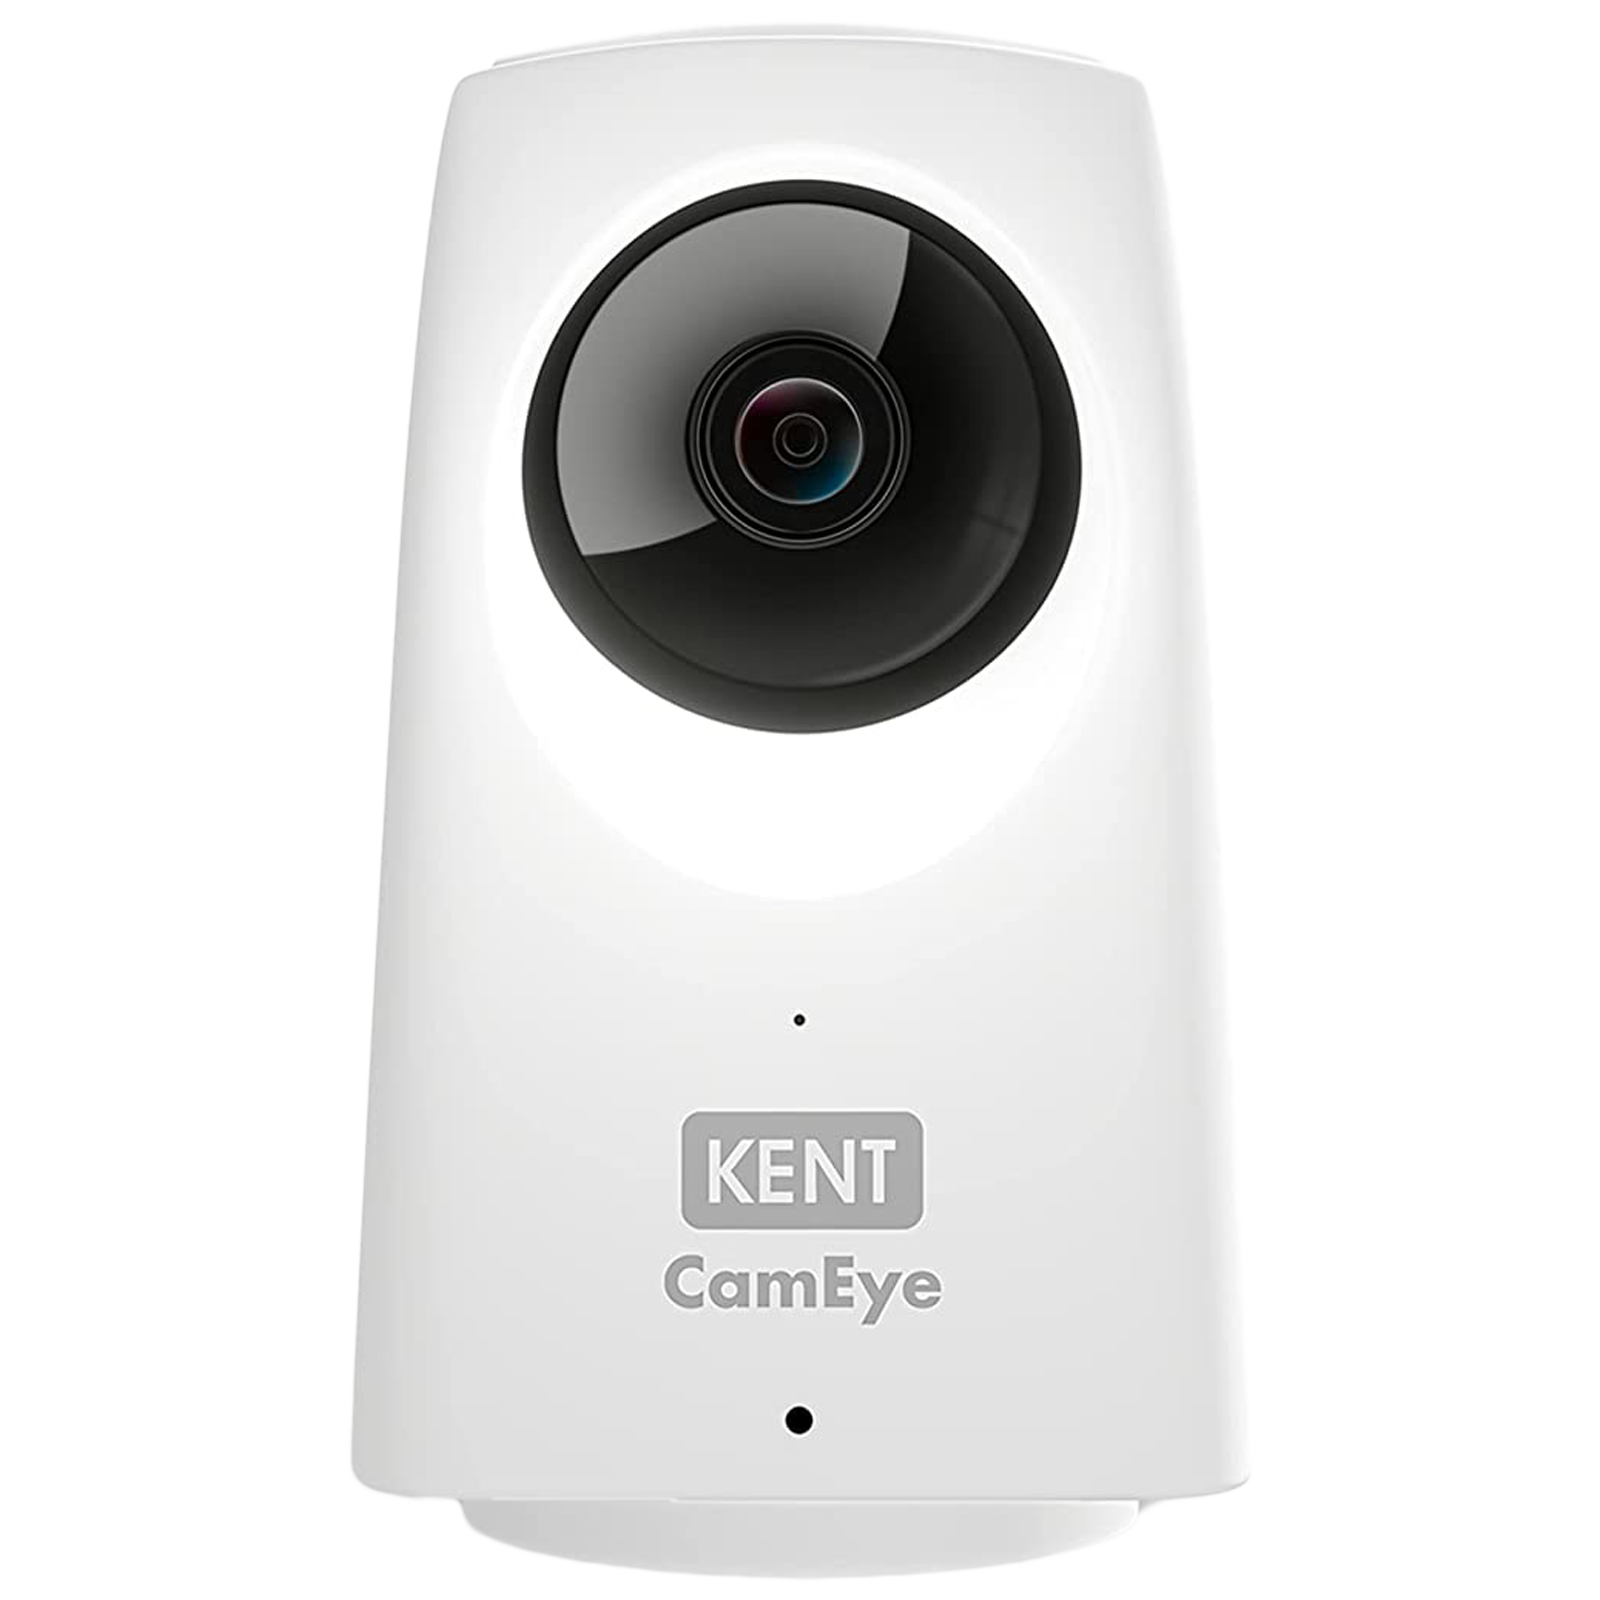 KENT CamEye HomeCam 360 IP CCTV Security Camera (360 Degree Panoramic View, 17010, White)